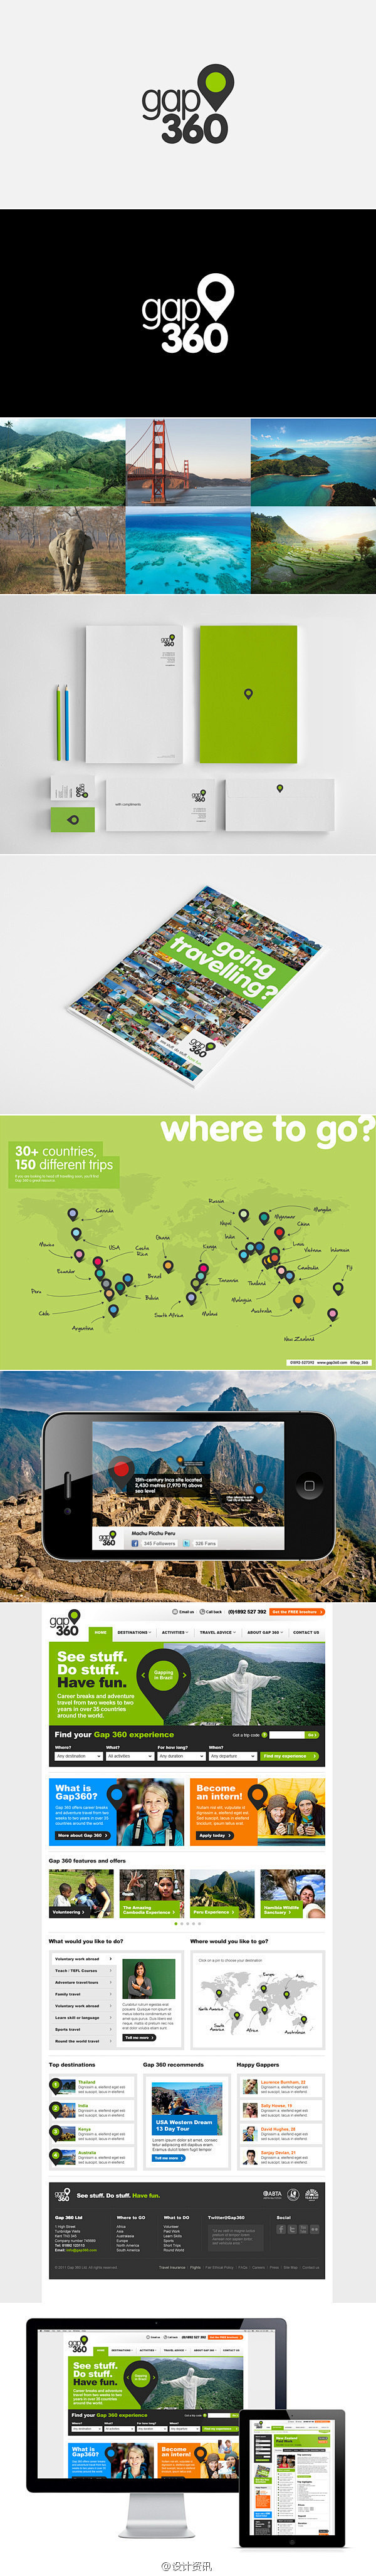 Gap 360旅游公司品牌形象设计